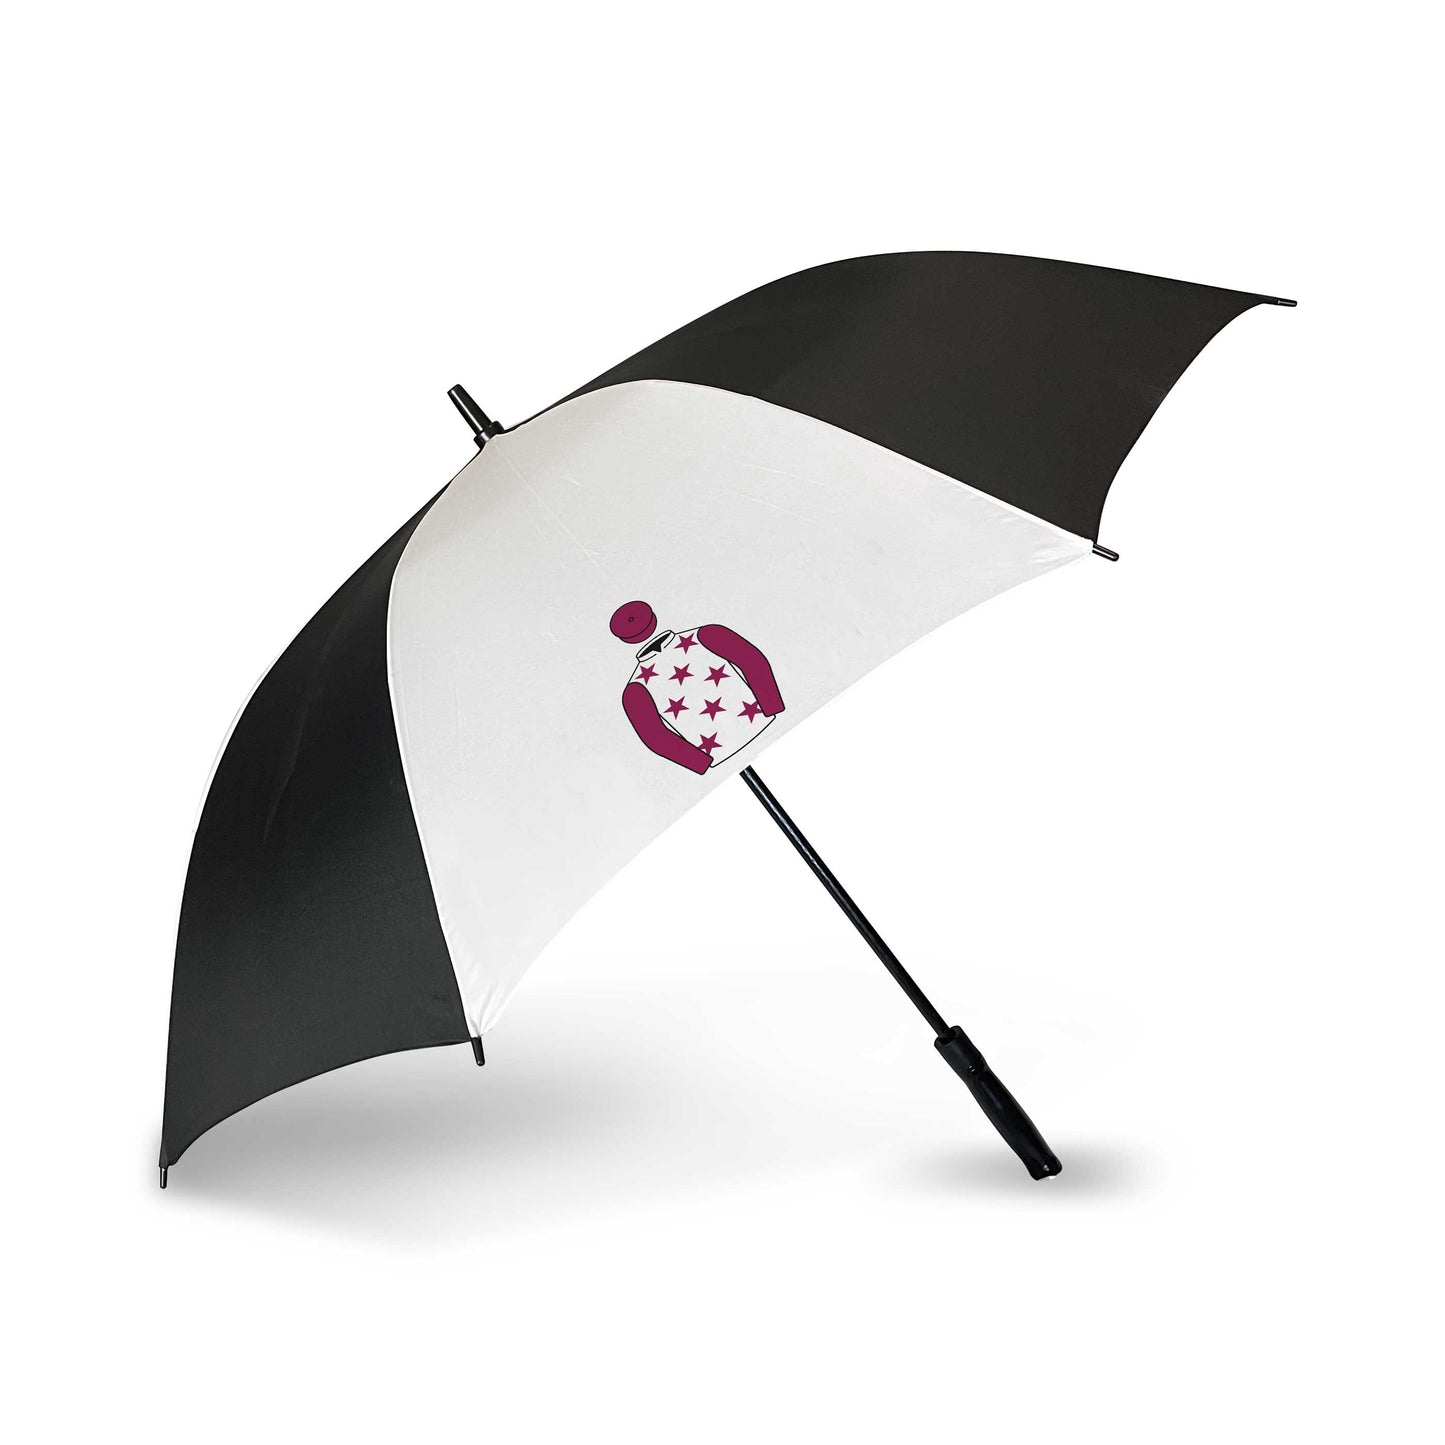 Munrowd's Partnership Umbrella - Umbrella - Hacked Up